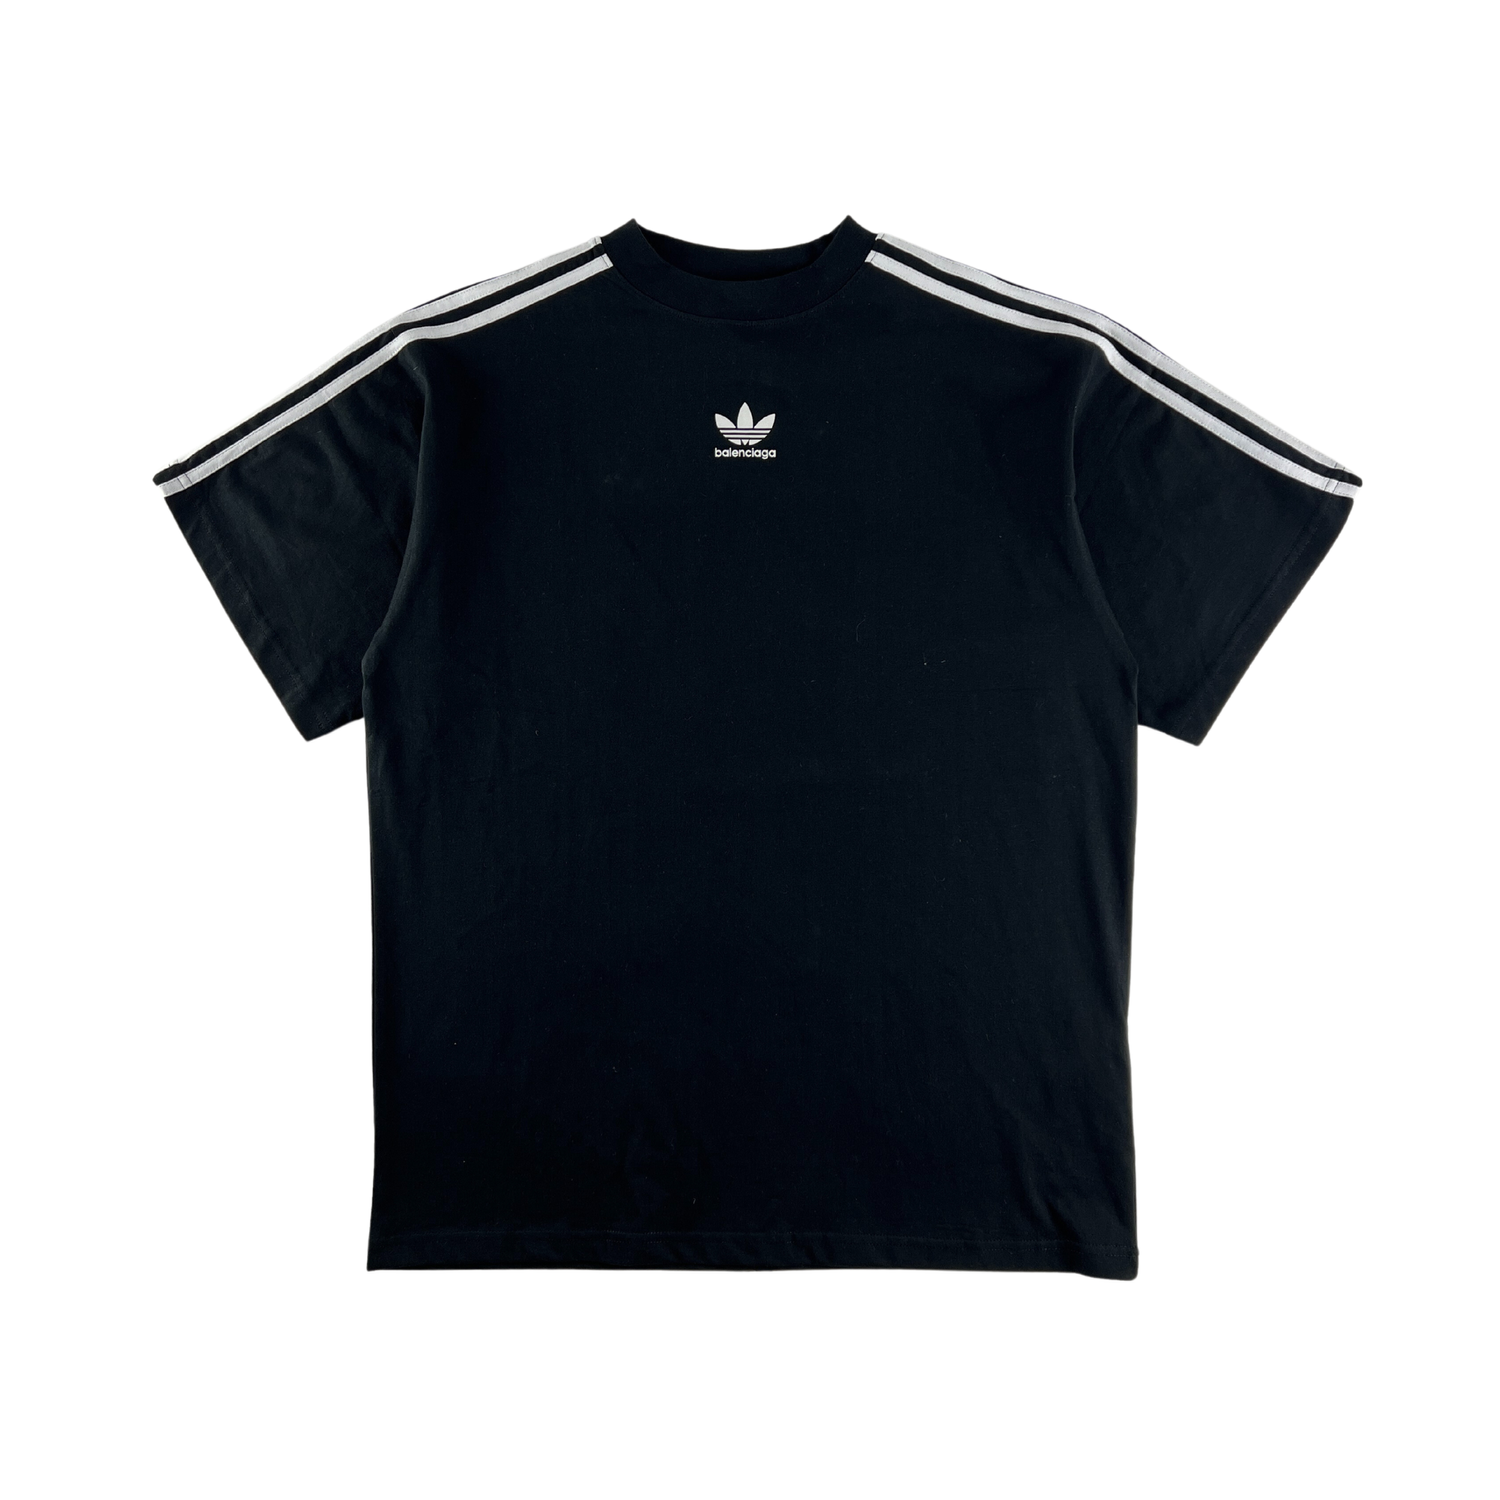 MARKED EU: Balenciaga x Adidas Black Oversized T-Shirt